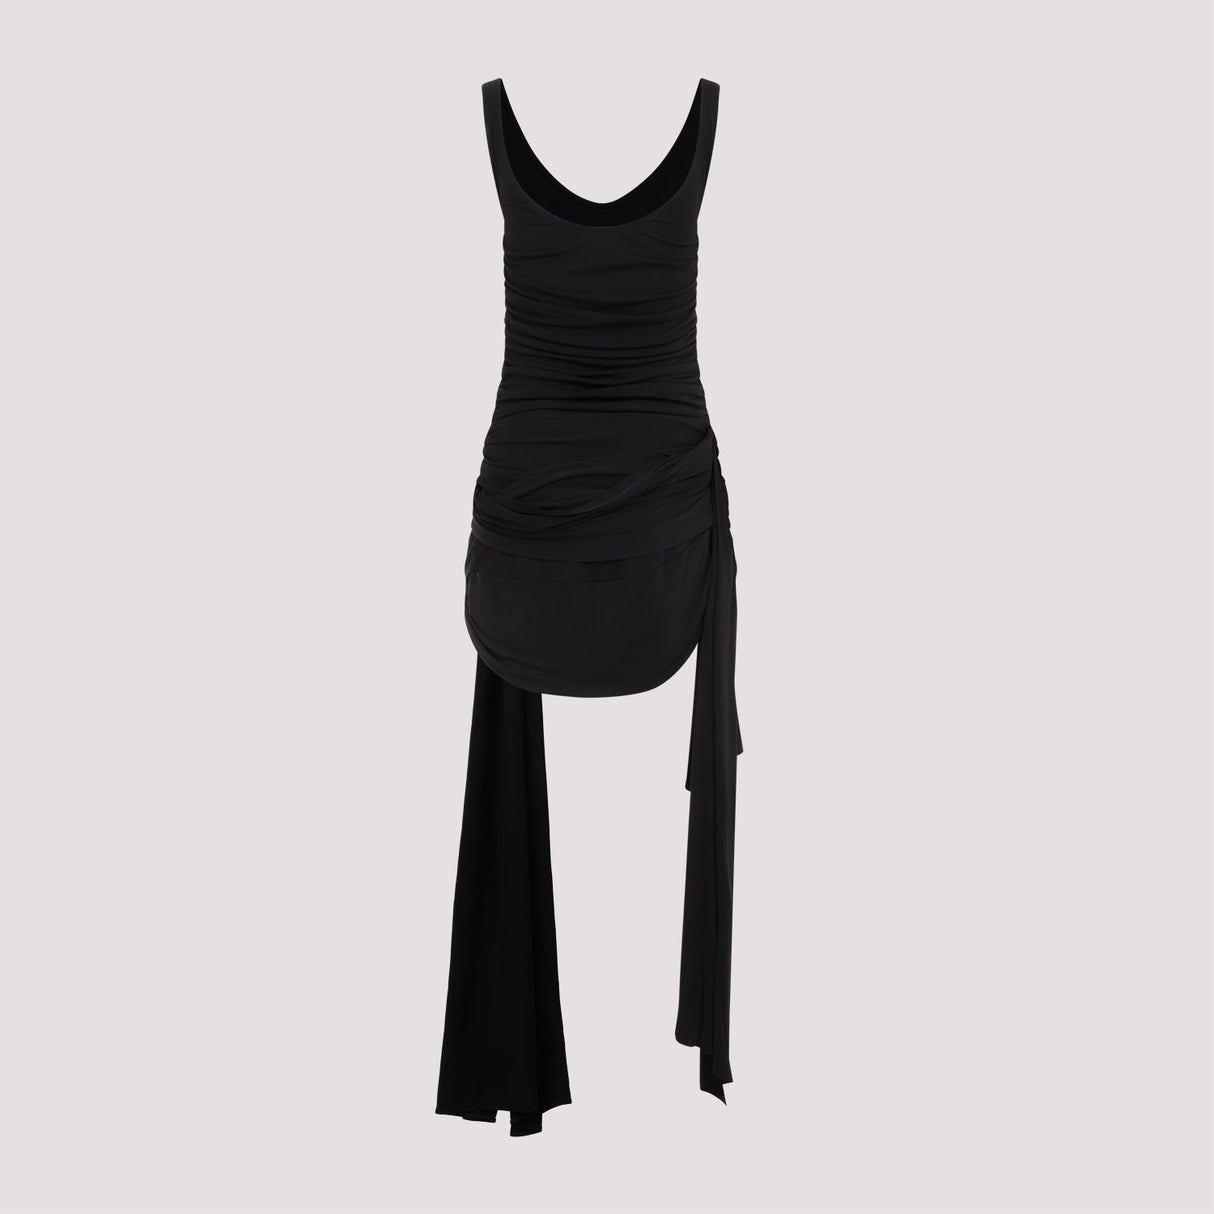 فستان أسود قصير بتصميم بسيط وذيل جانبي درامي